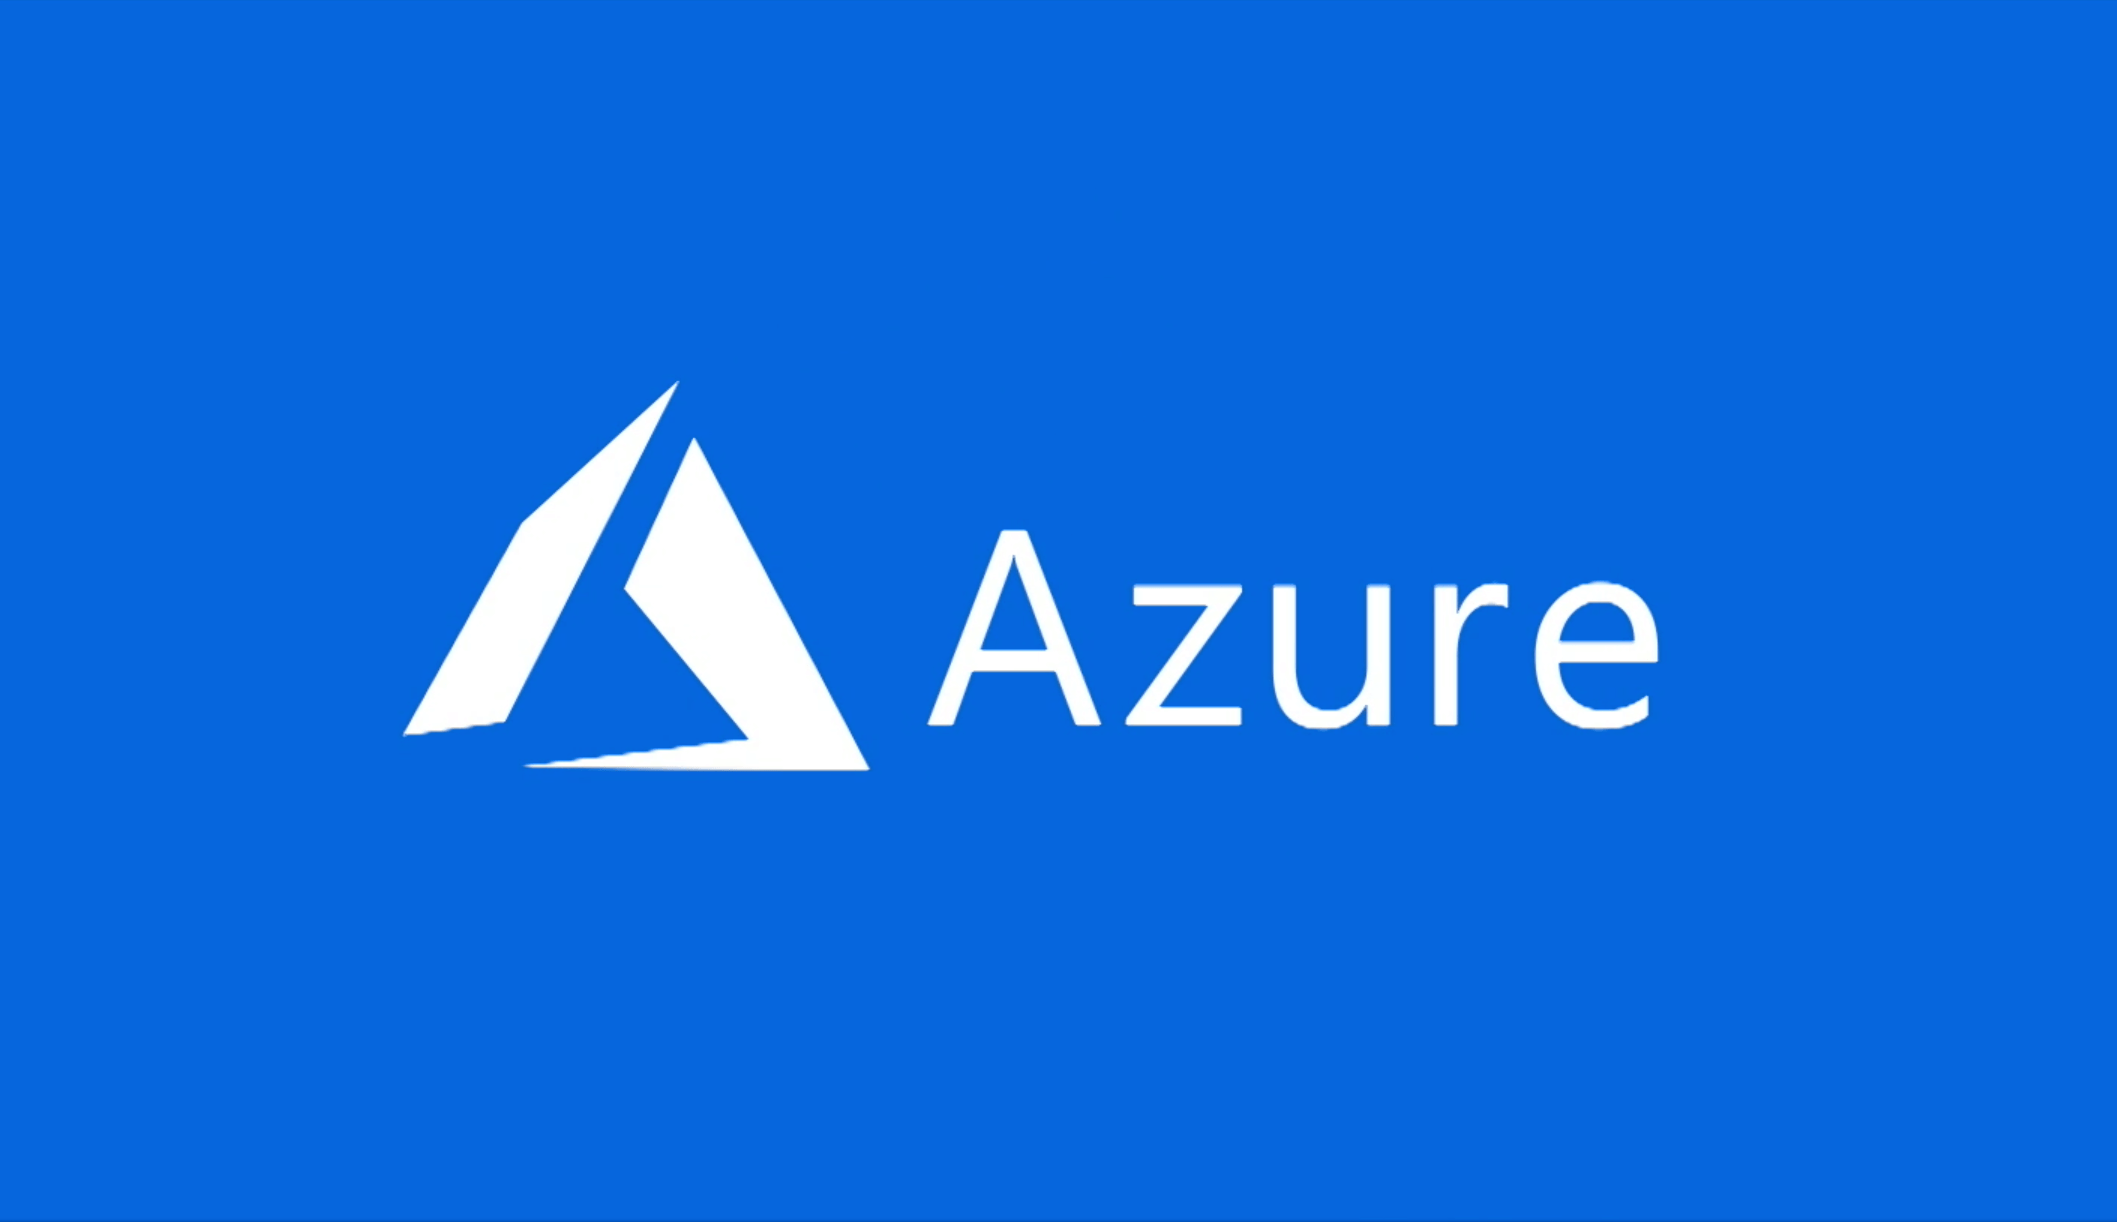 Azure DevOps Logo - Microsoft announces Azure DevOps, will succeed Visual Studio Team